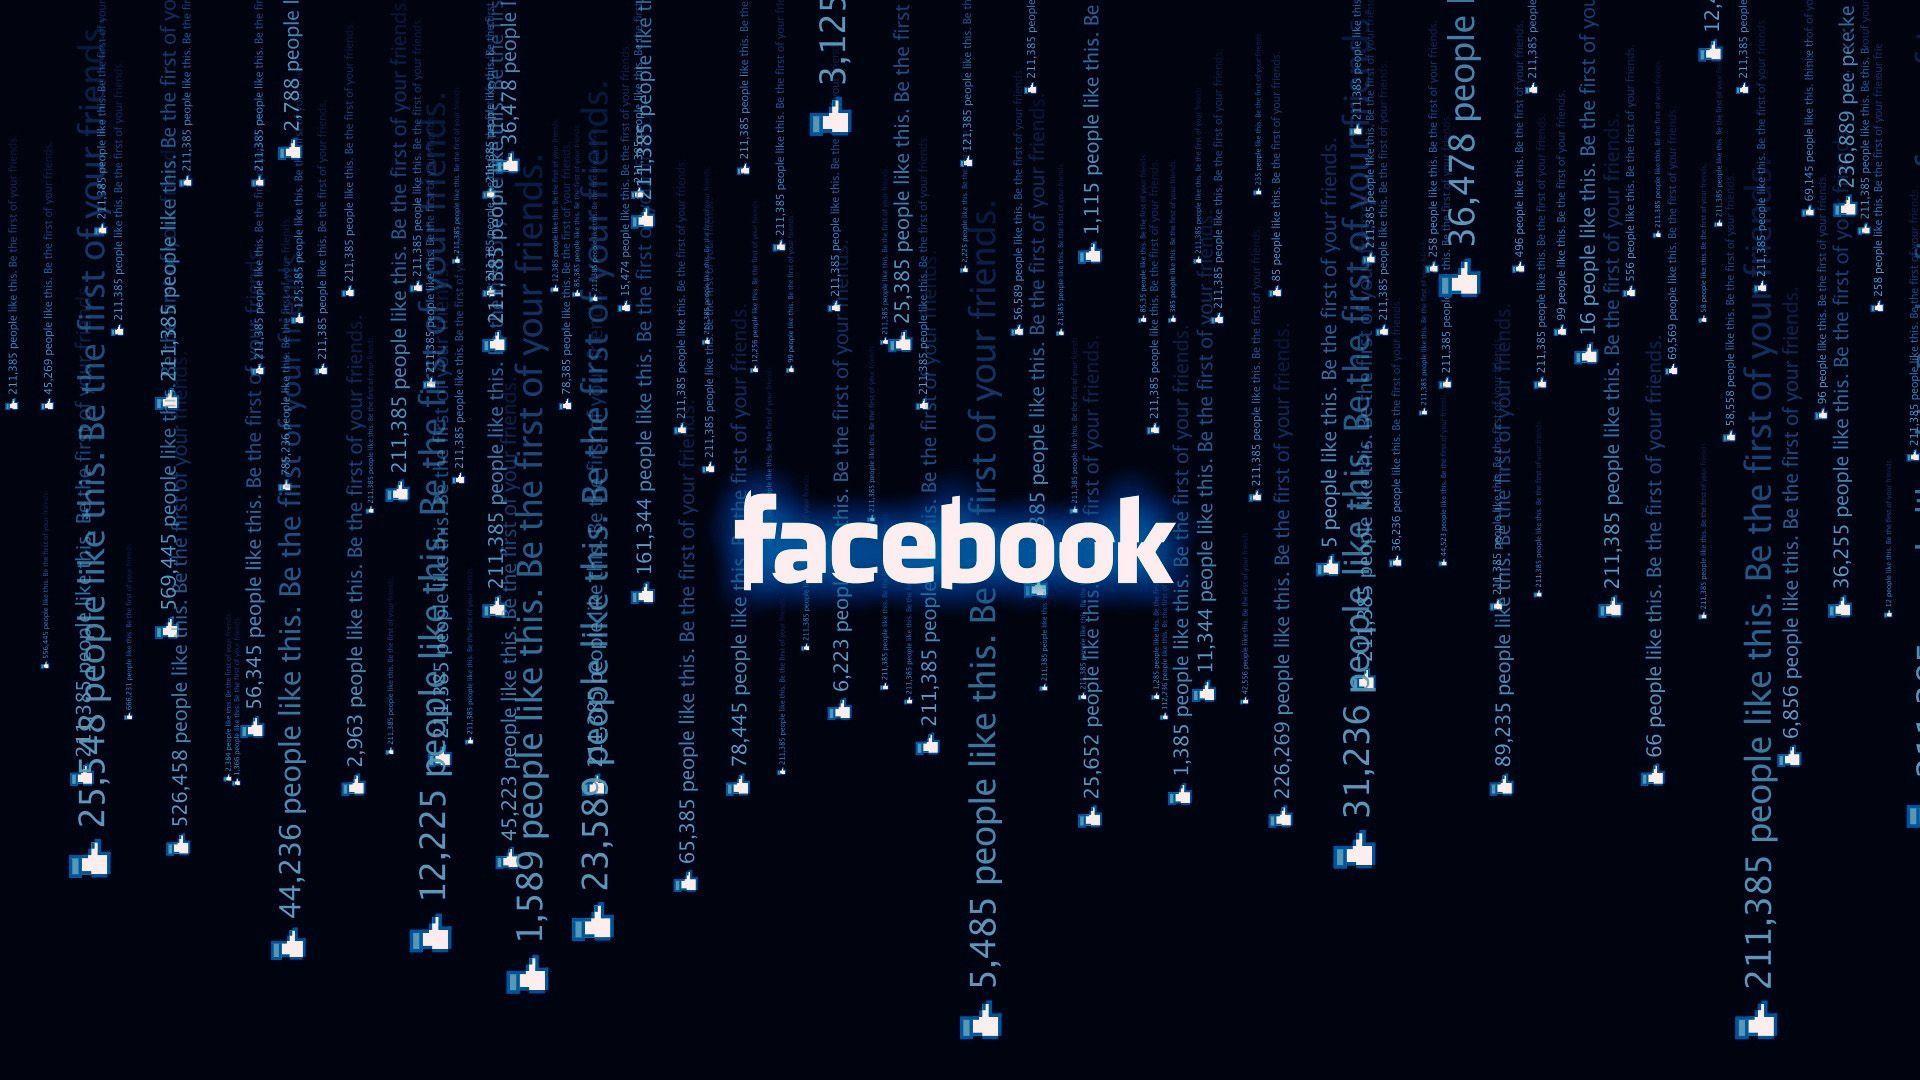 Matrix Style Facebook Wallpaper. HD Brands and Logos Wallpaper